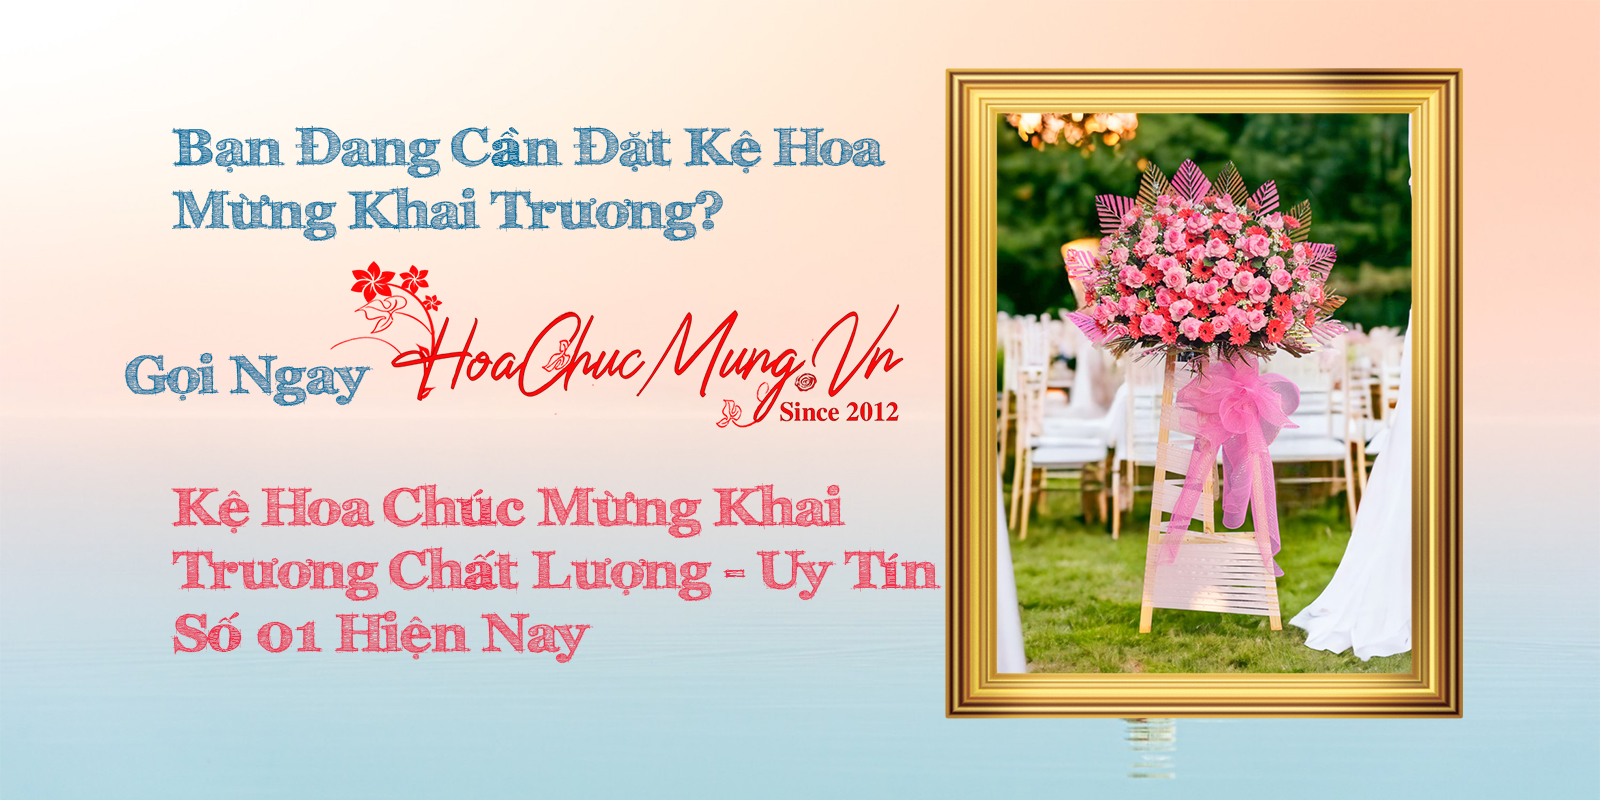 Ke Hoa Chuc Mung Khai Truong Hoa Chuc Mung VN